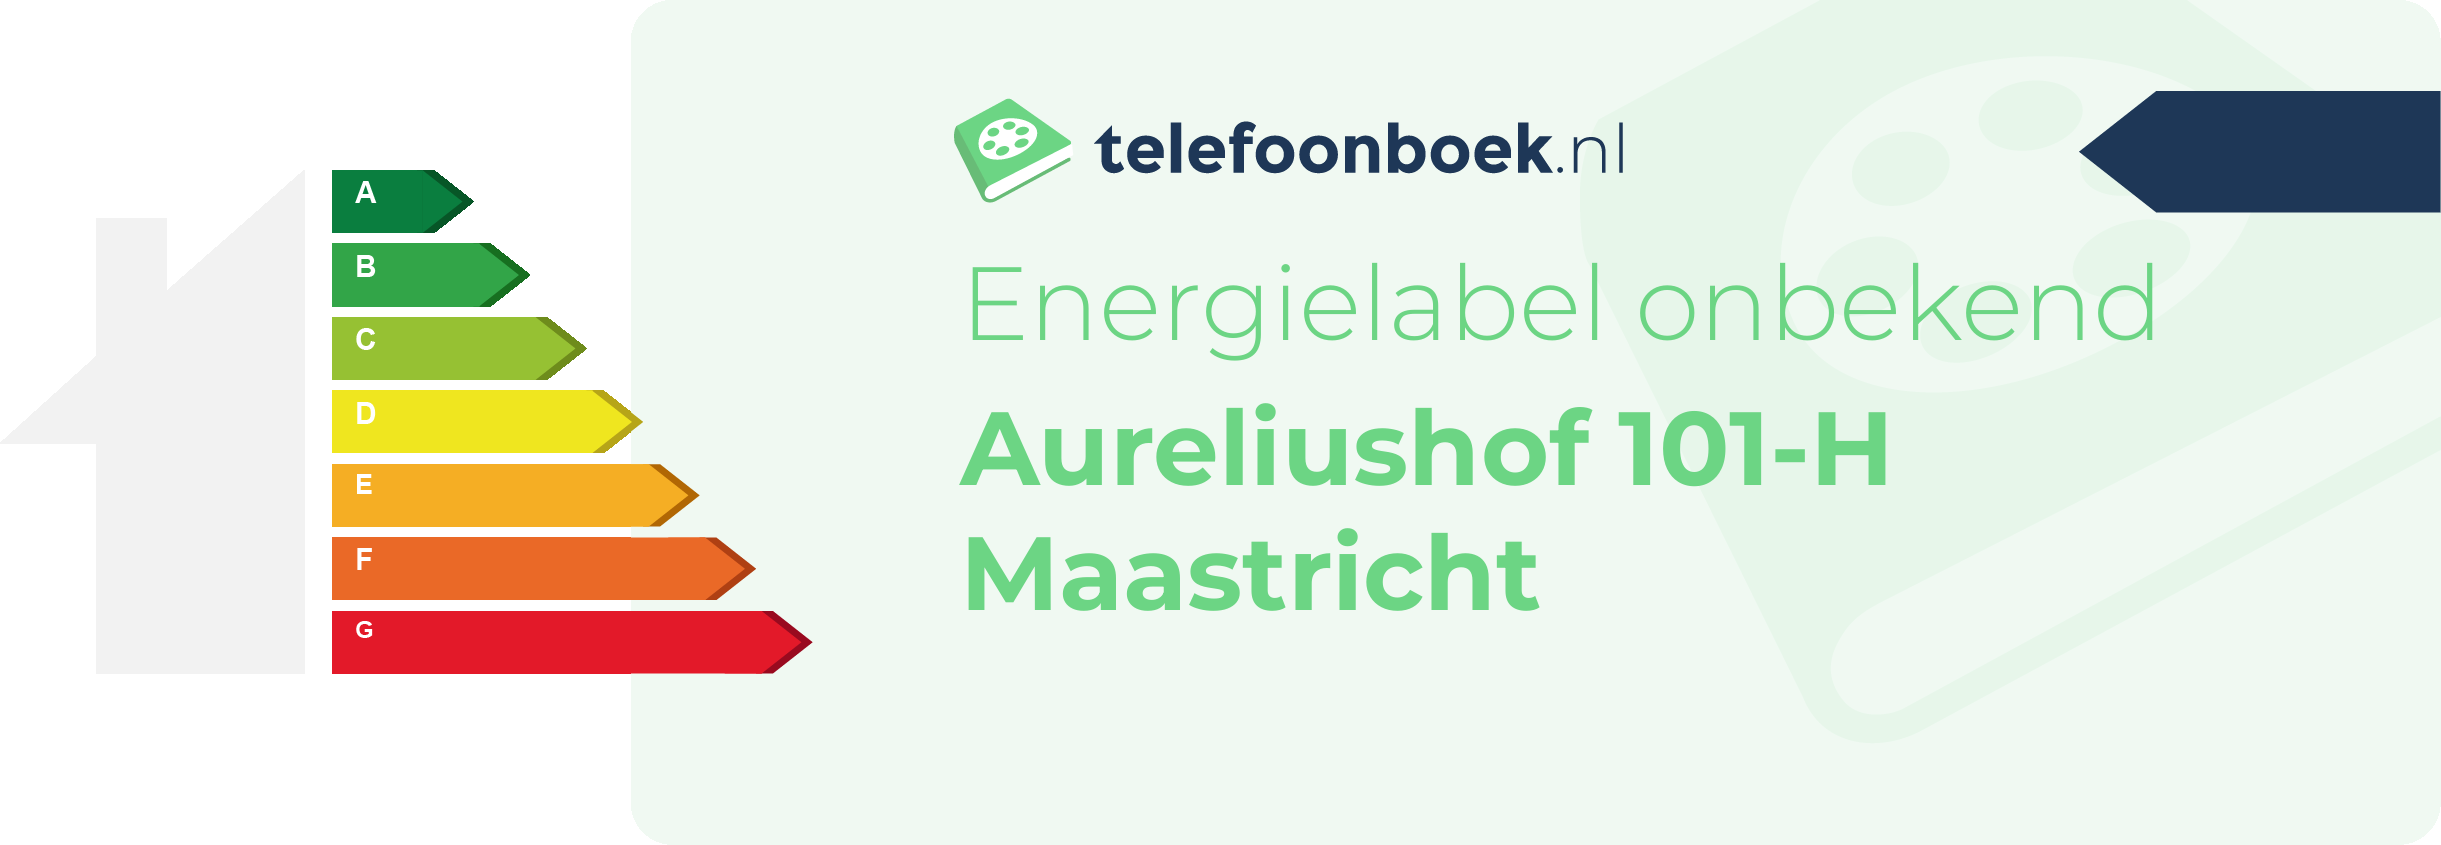 Energielabel Aureliushof 101-H Maastricht